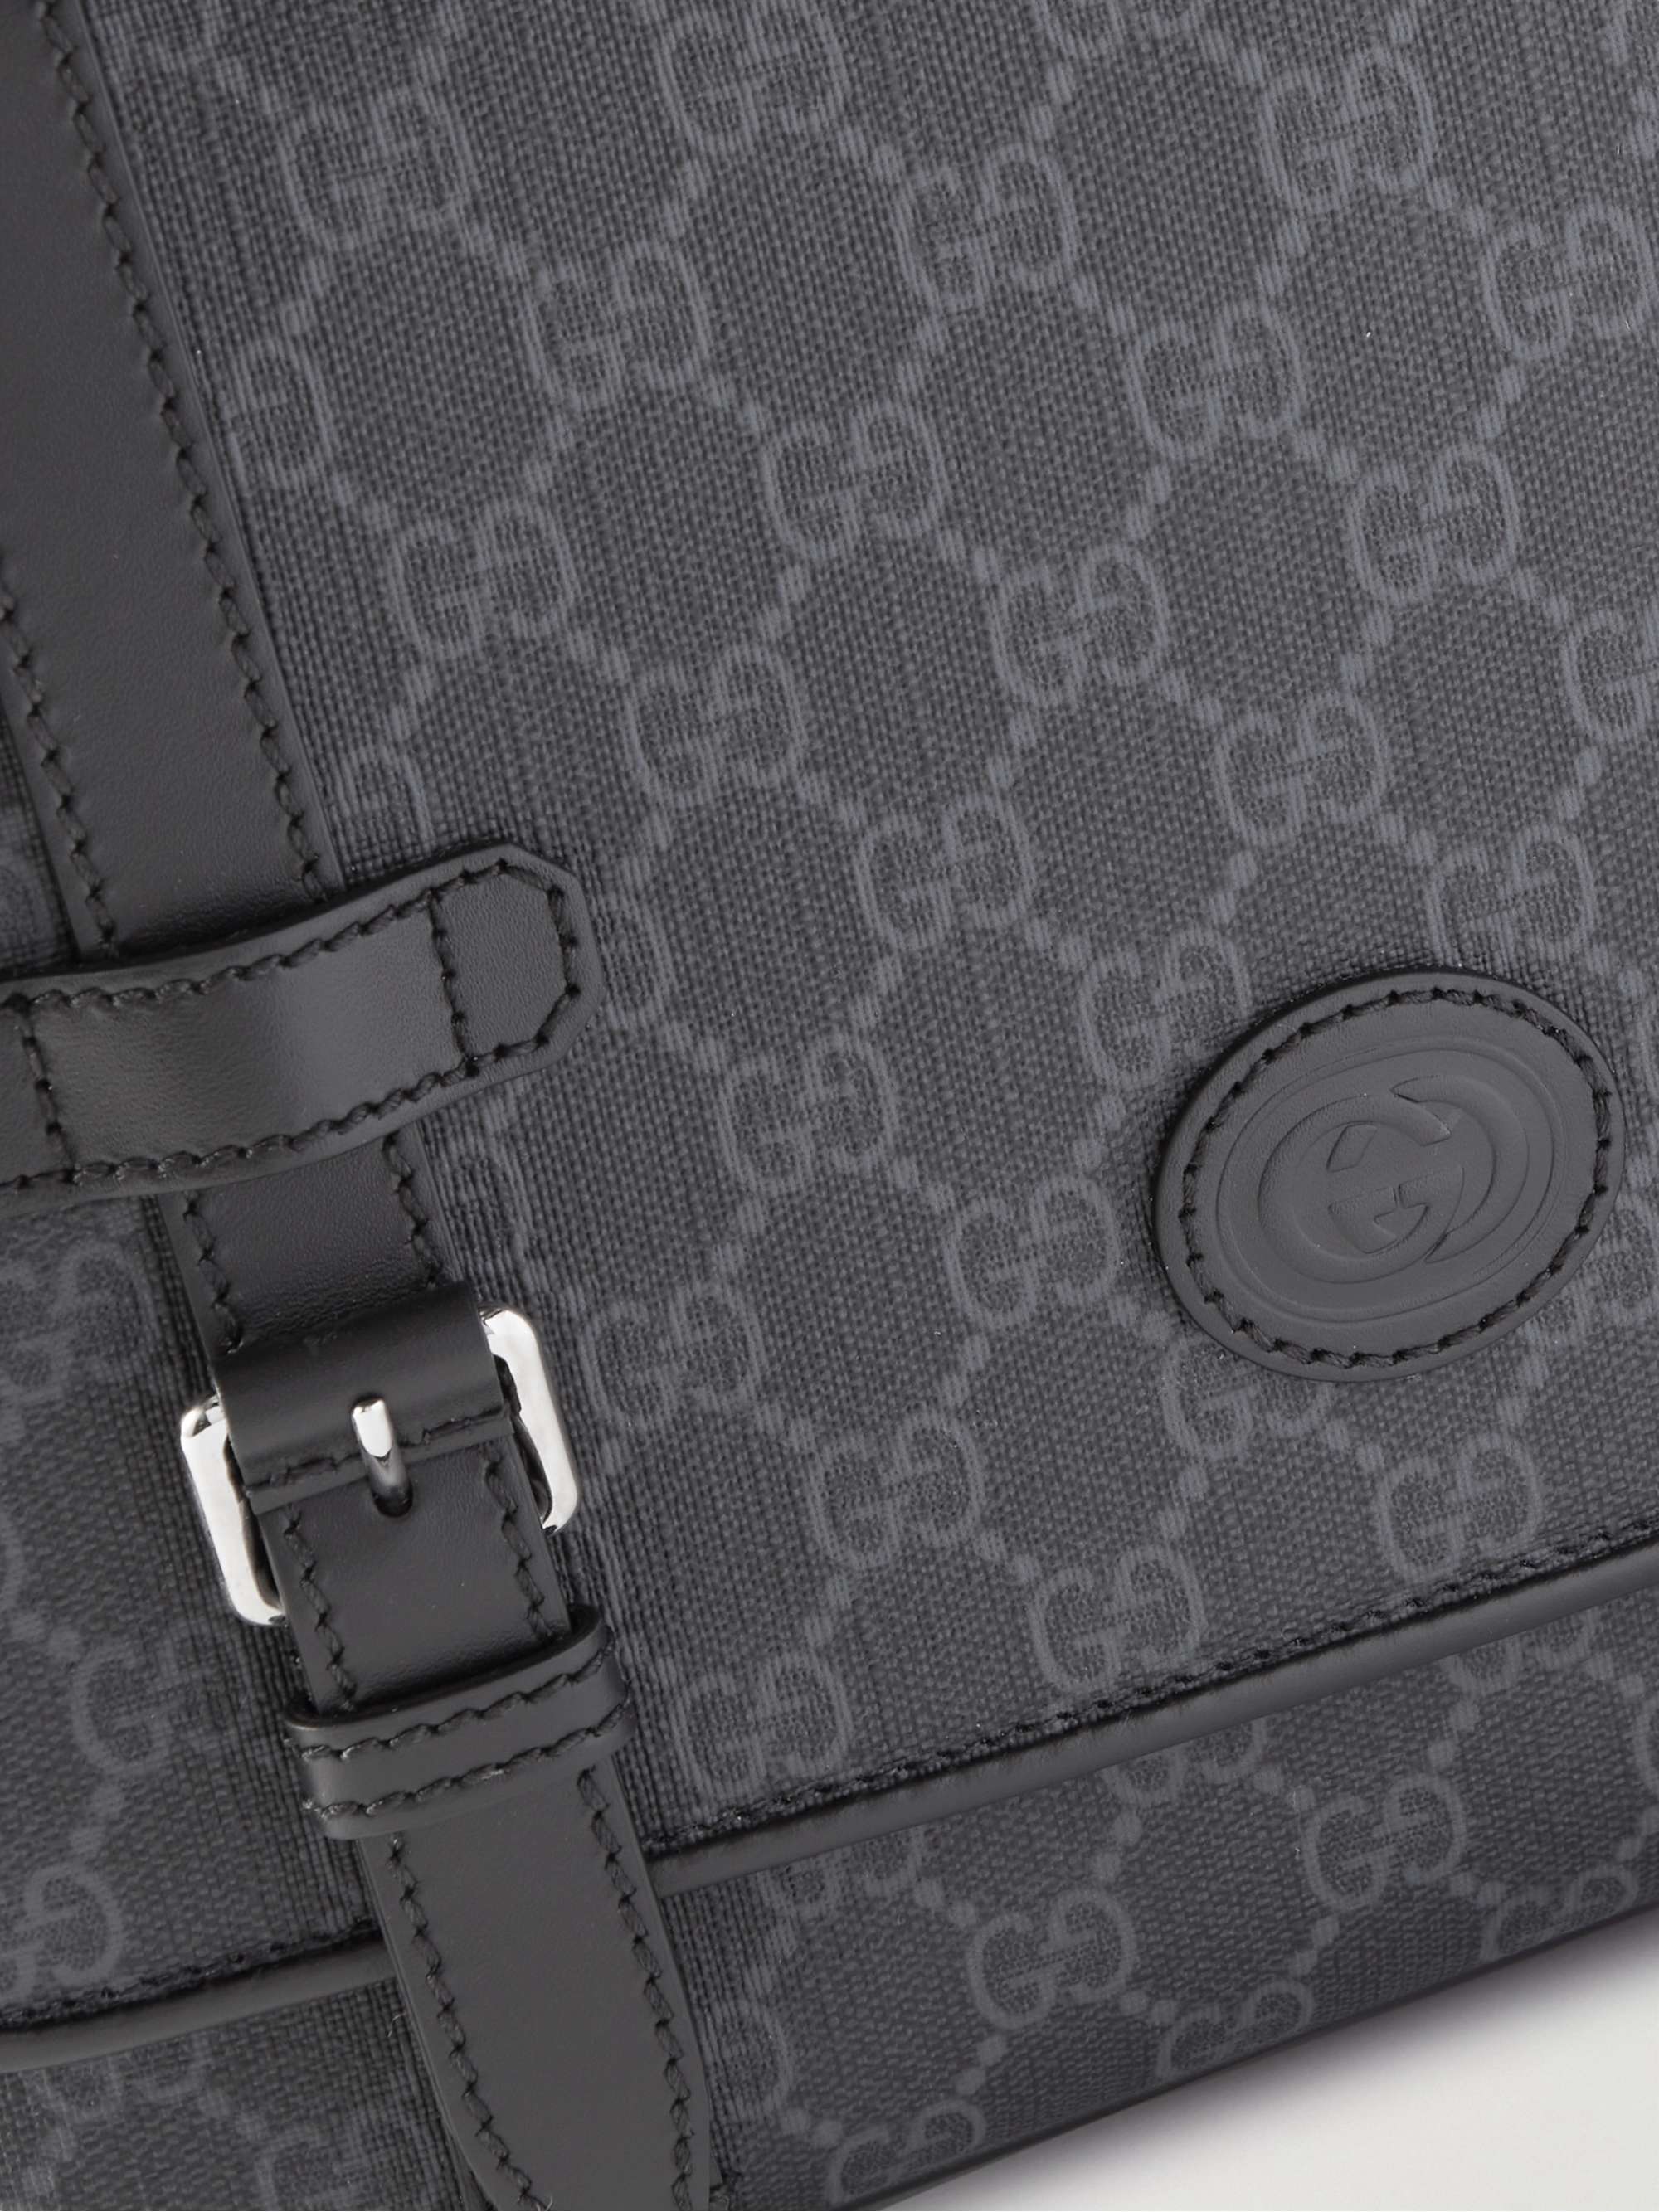 GUCCI Leather-Trimmed Monogrammed Coated-Canvas Messenger Bag